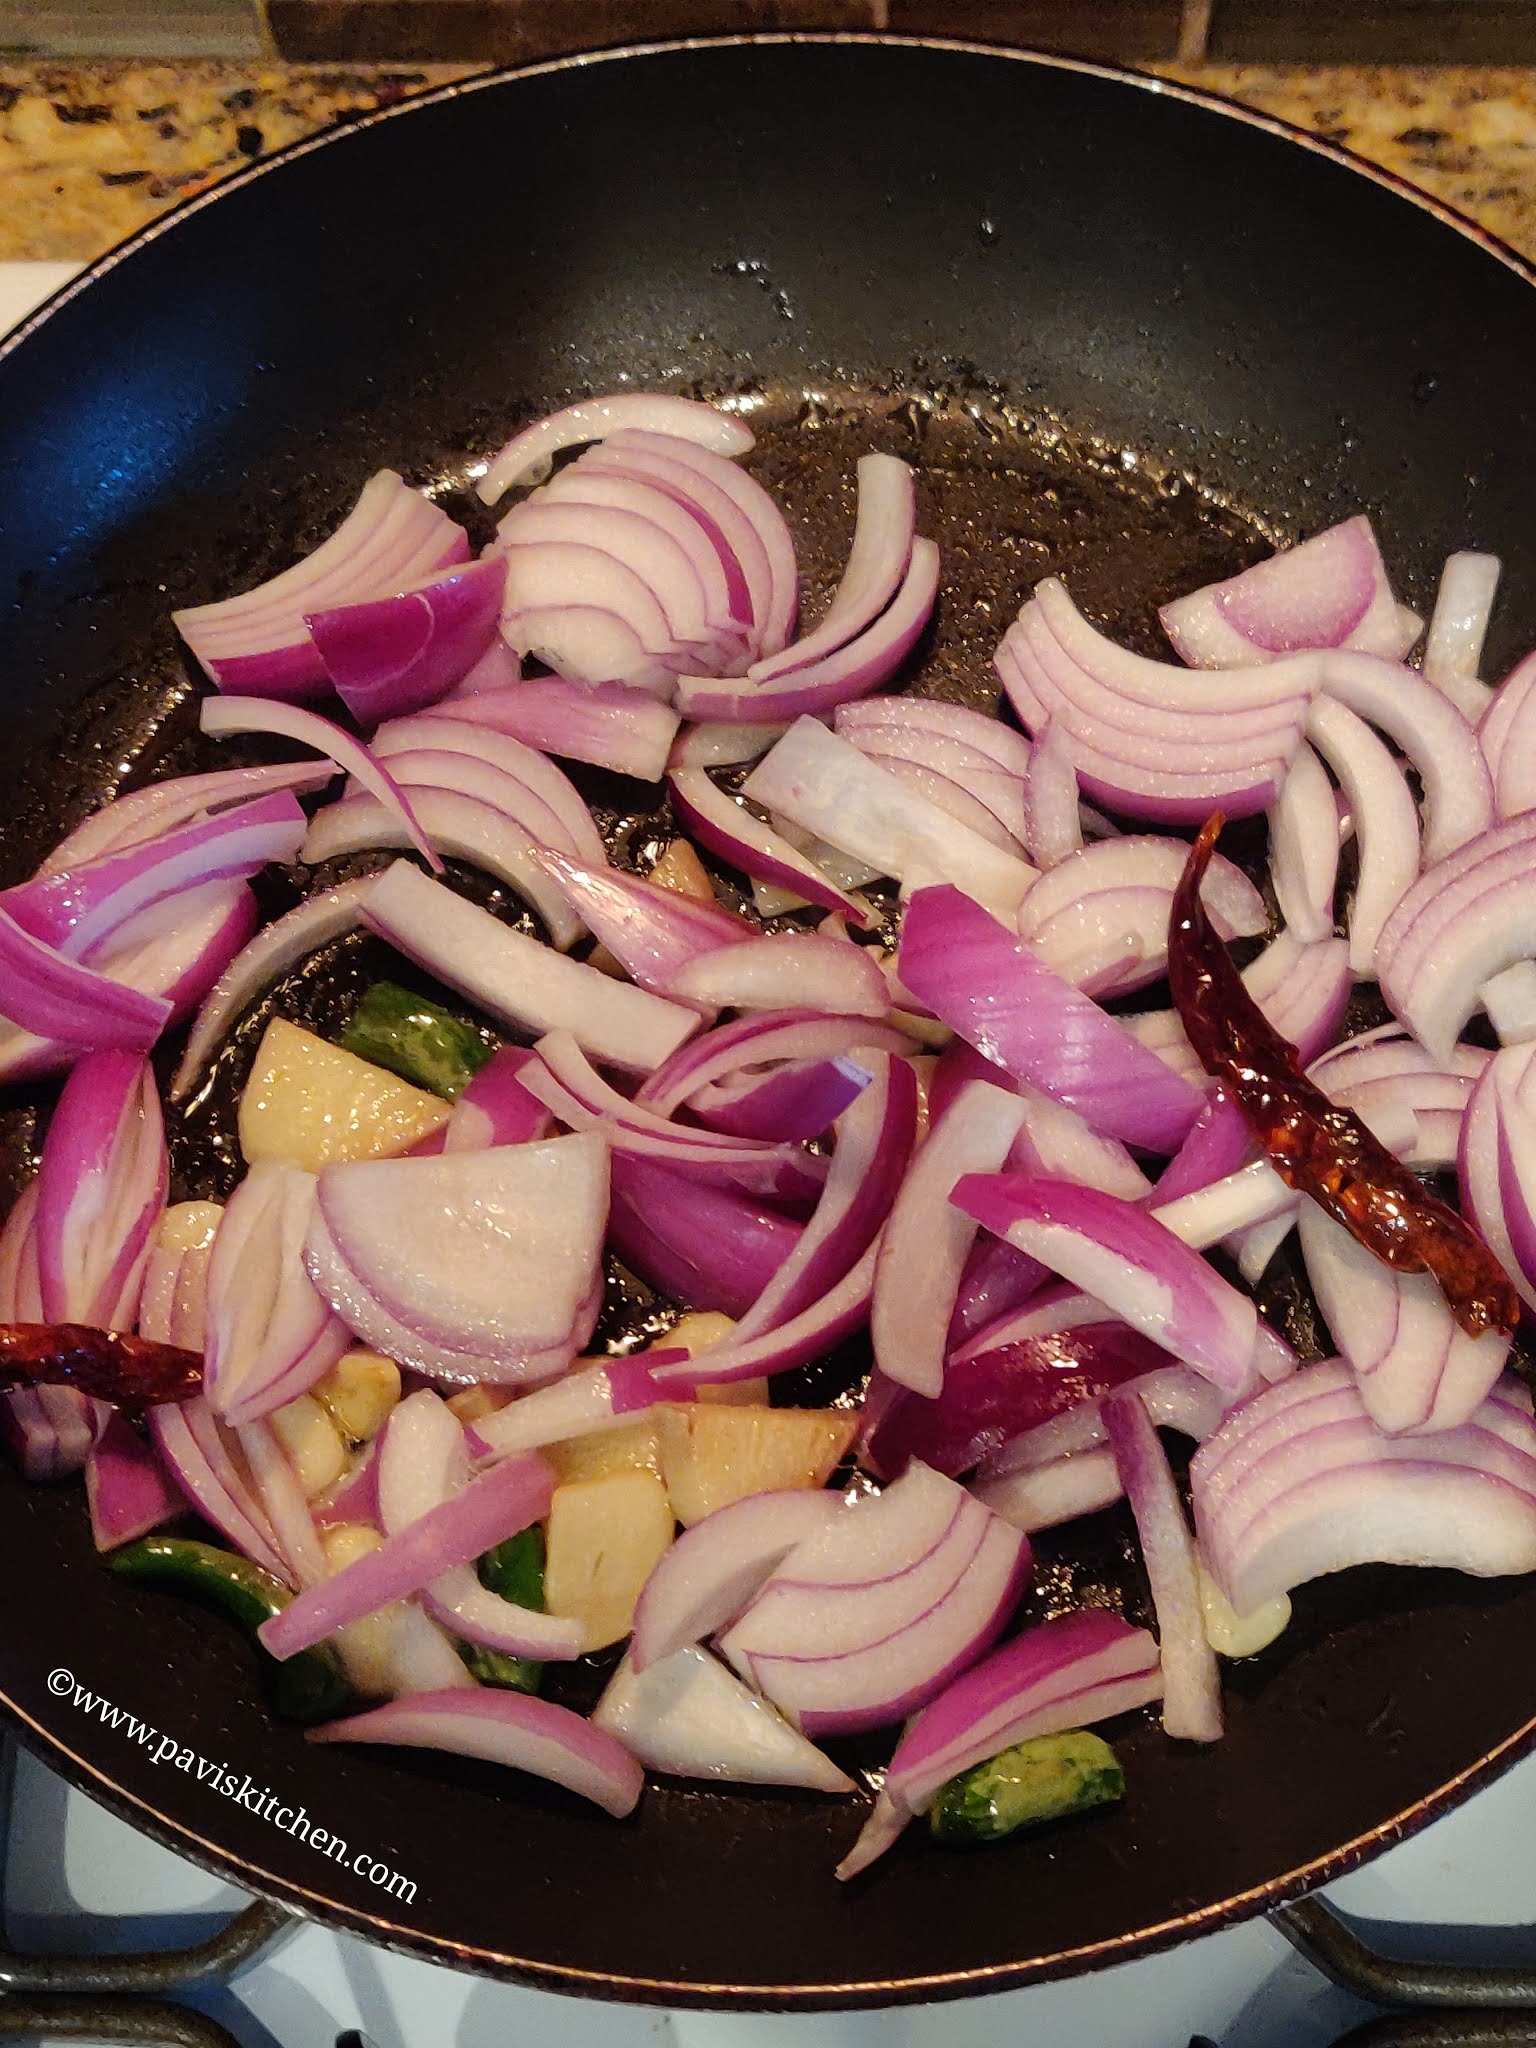 Onion tomato chutney recipe | Tomato onion chutney recipe | South Indian Thakali vengaya chutney